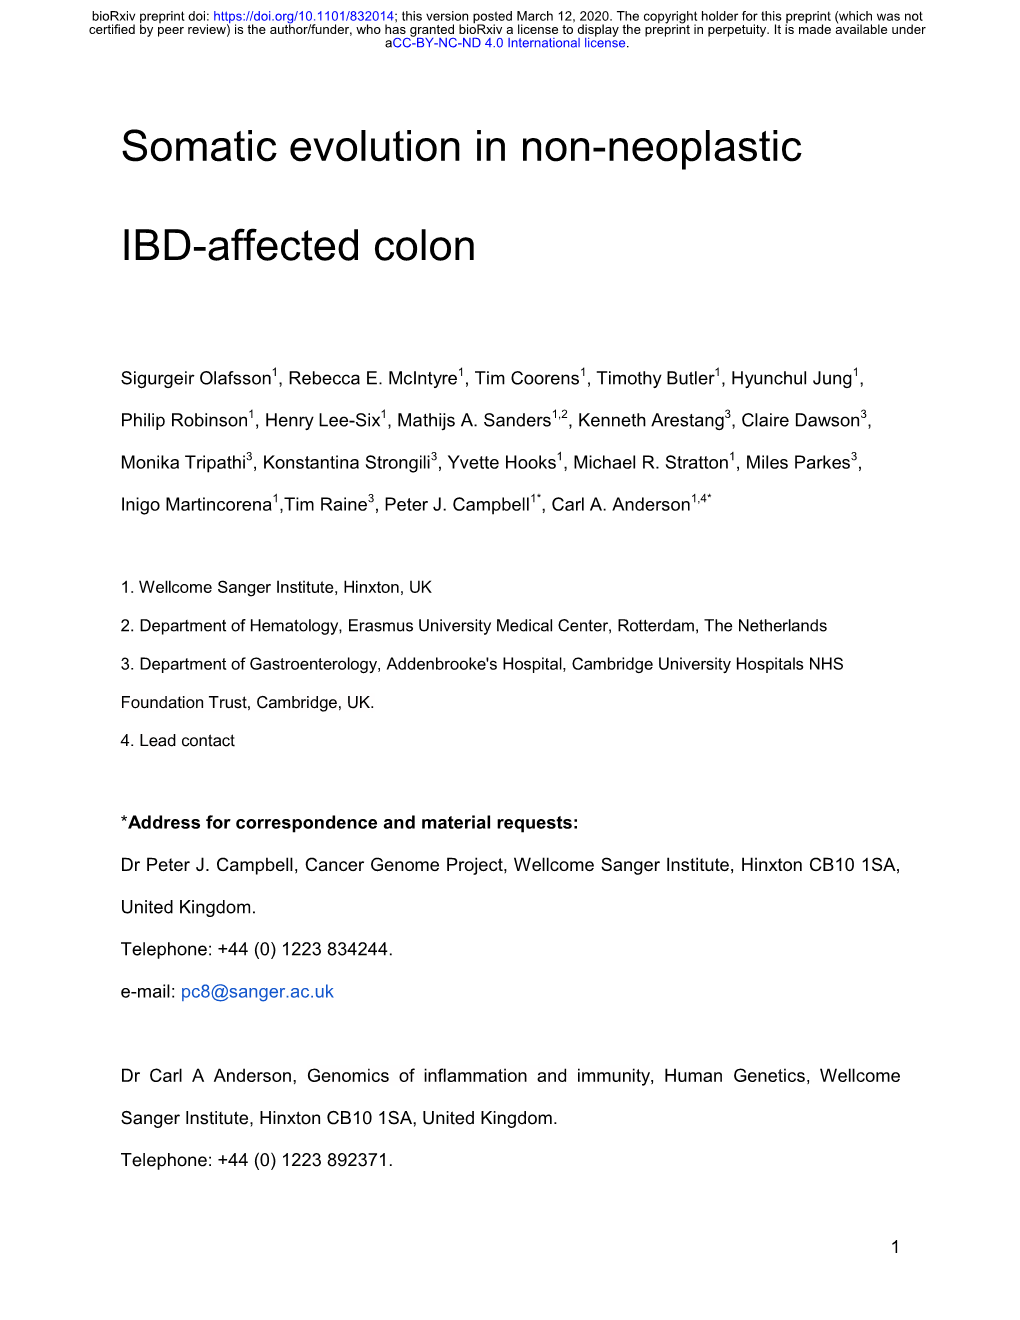 Somatic Evolution in Non-Neoplastic IBD-Affected Colon